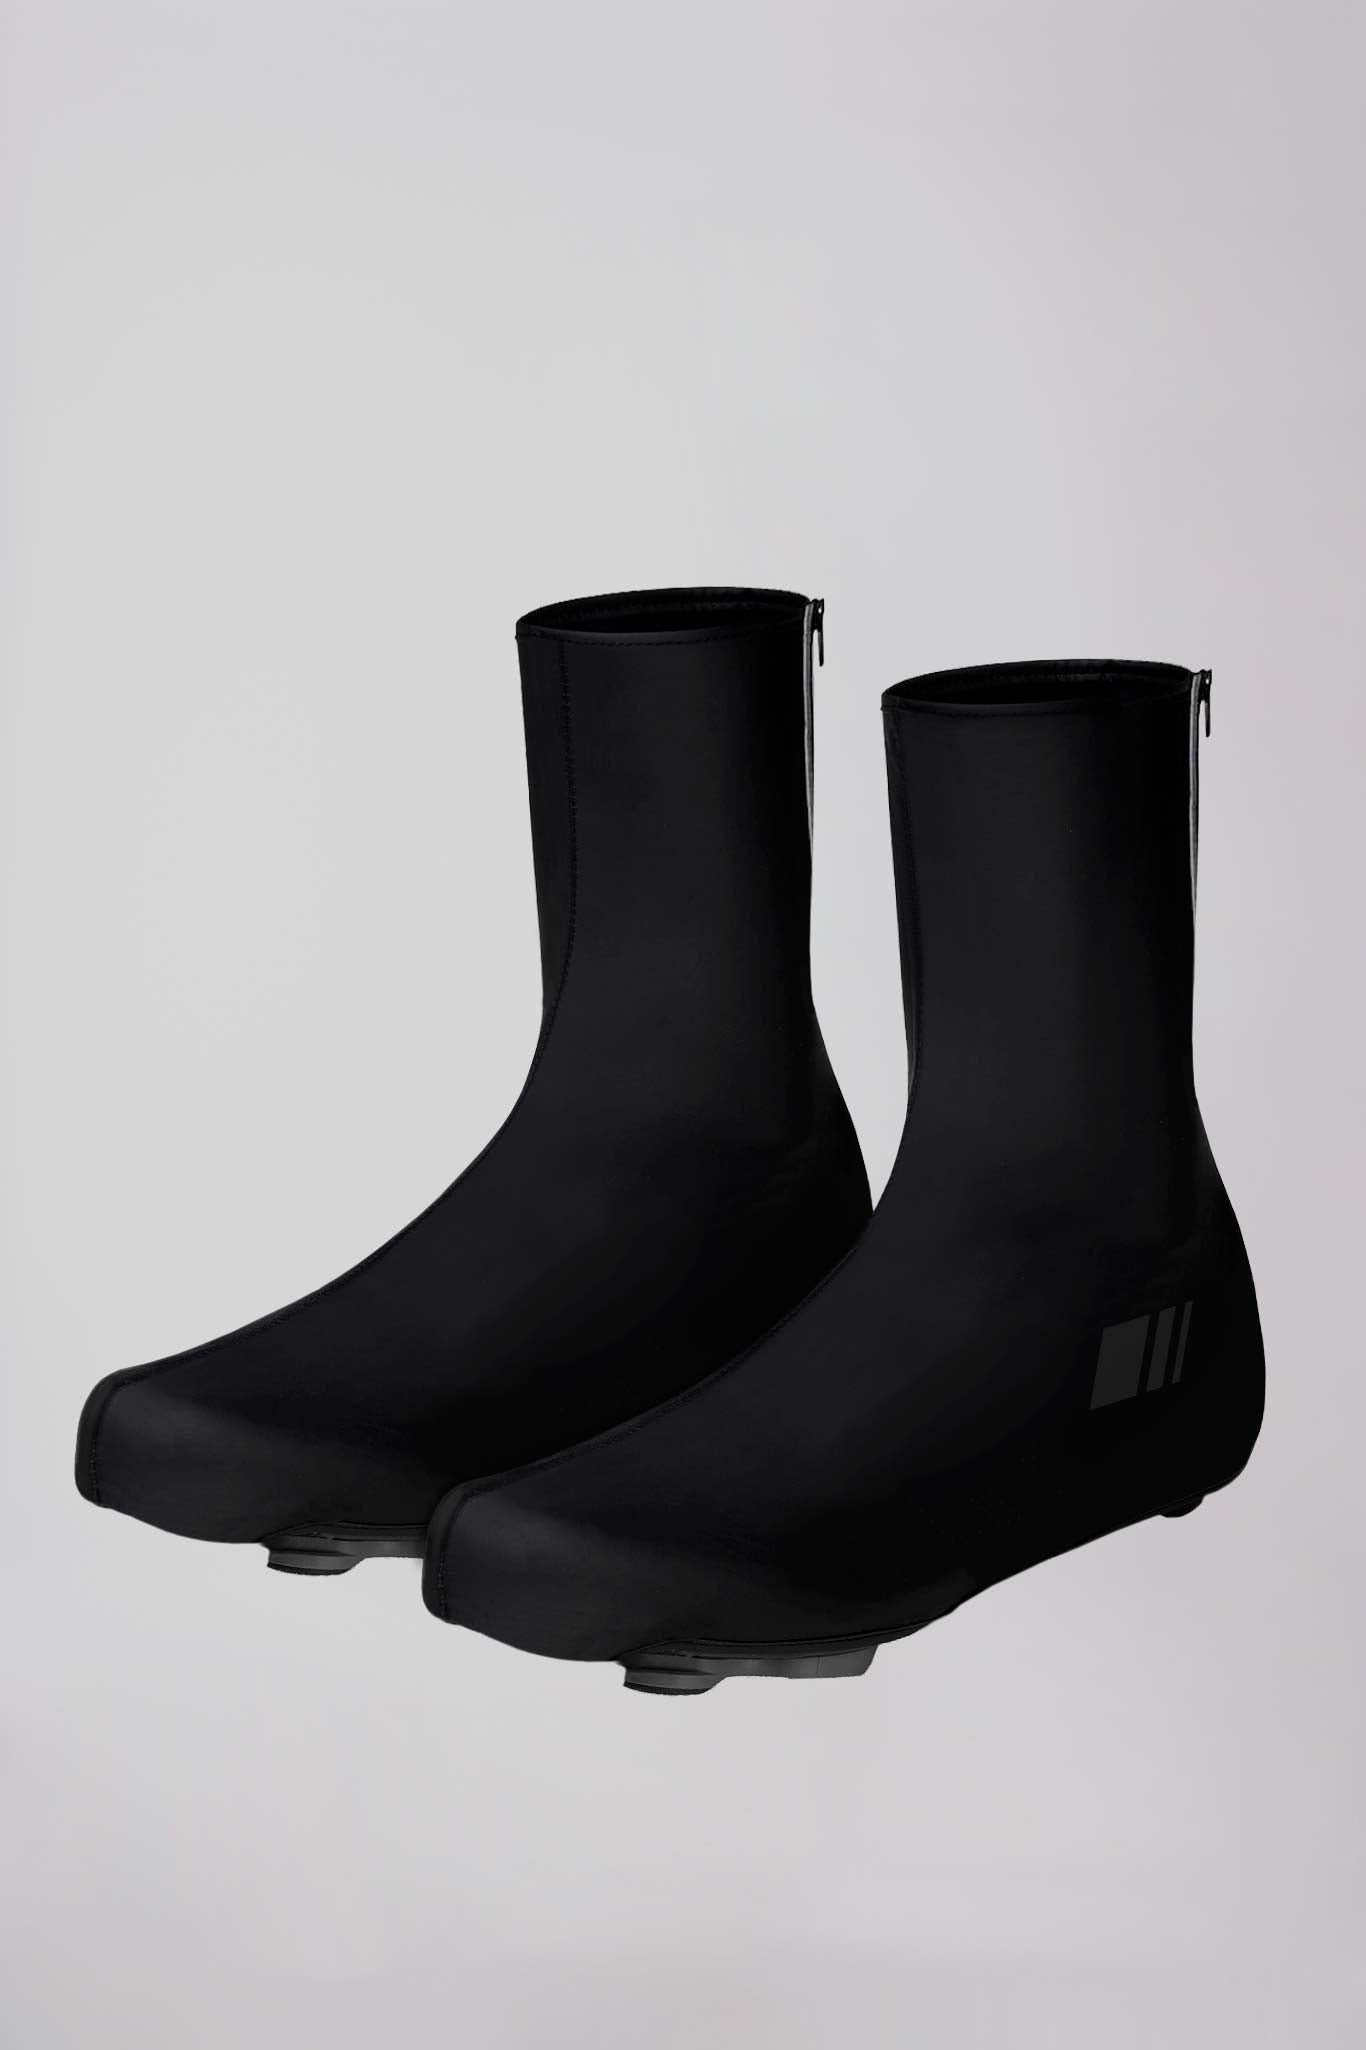 ciclismo impermeable negro cubre zapatos botas calas con cremallera proteccion protector